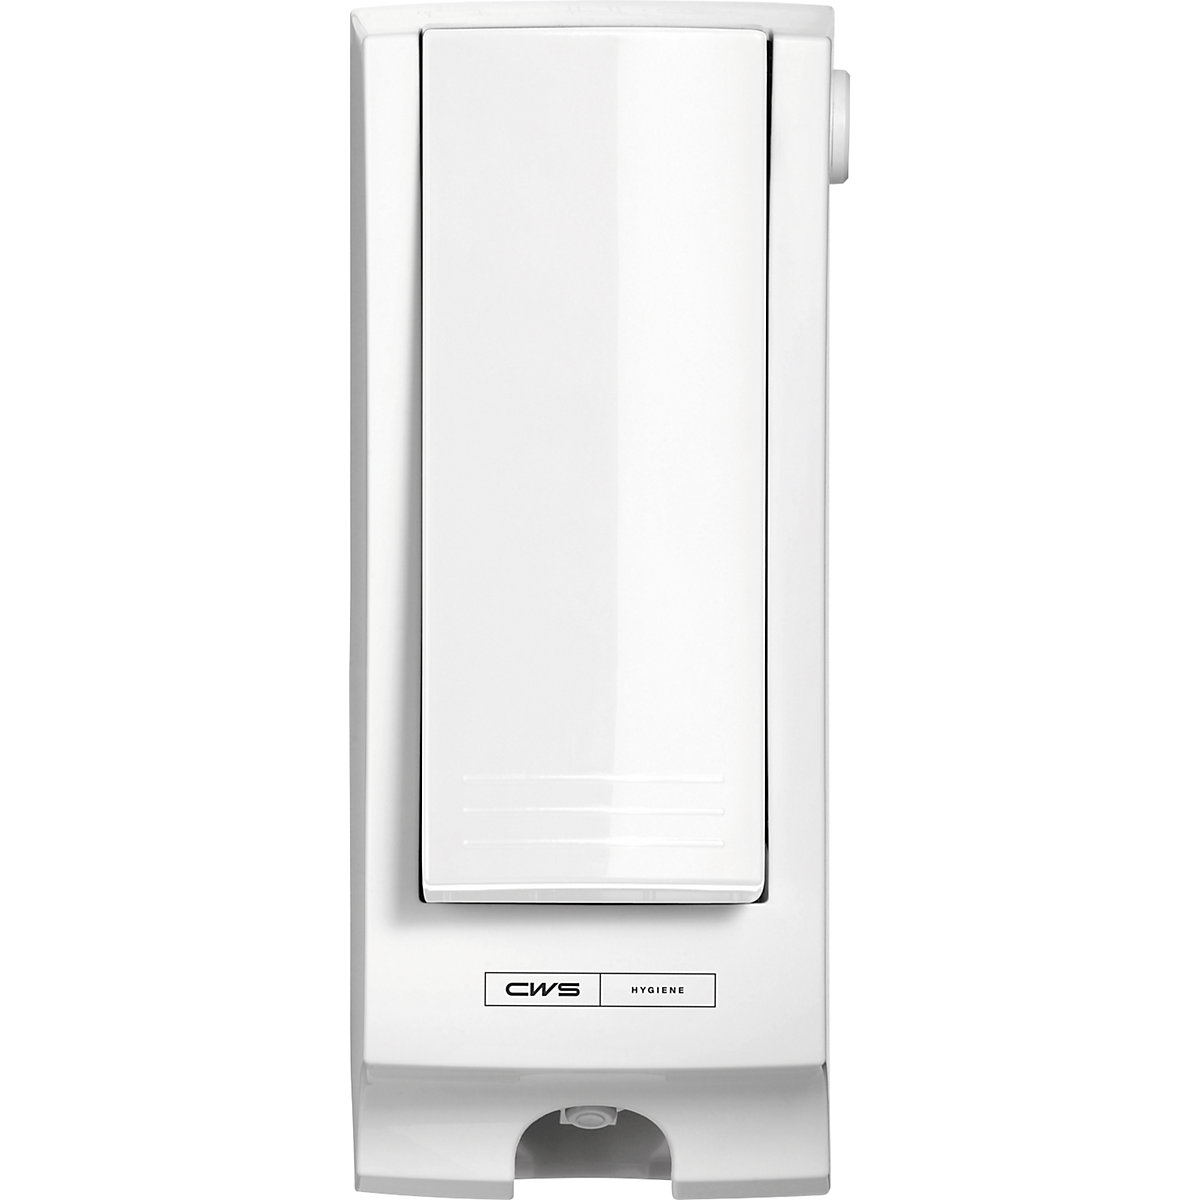 driehoek litteken marge CWS – ParadiseLine-dispenser van wc-brilreiniger SeatCleaner: inhoud 0,3 l,  kunststof, wit | VINK LISSE